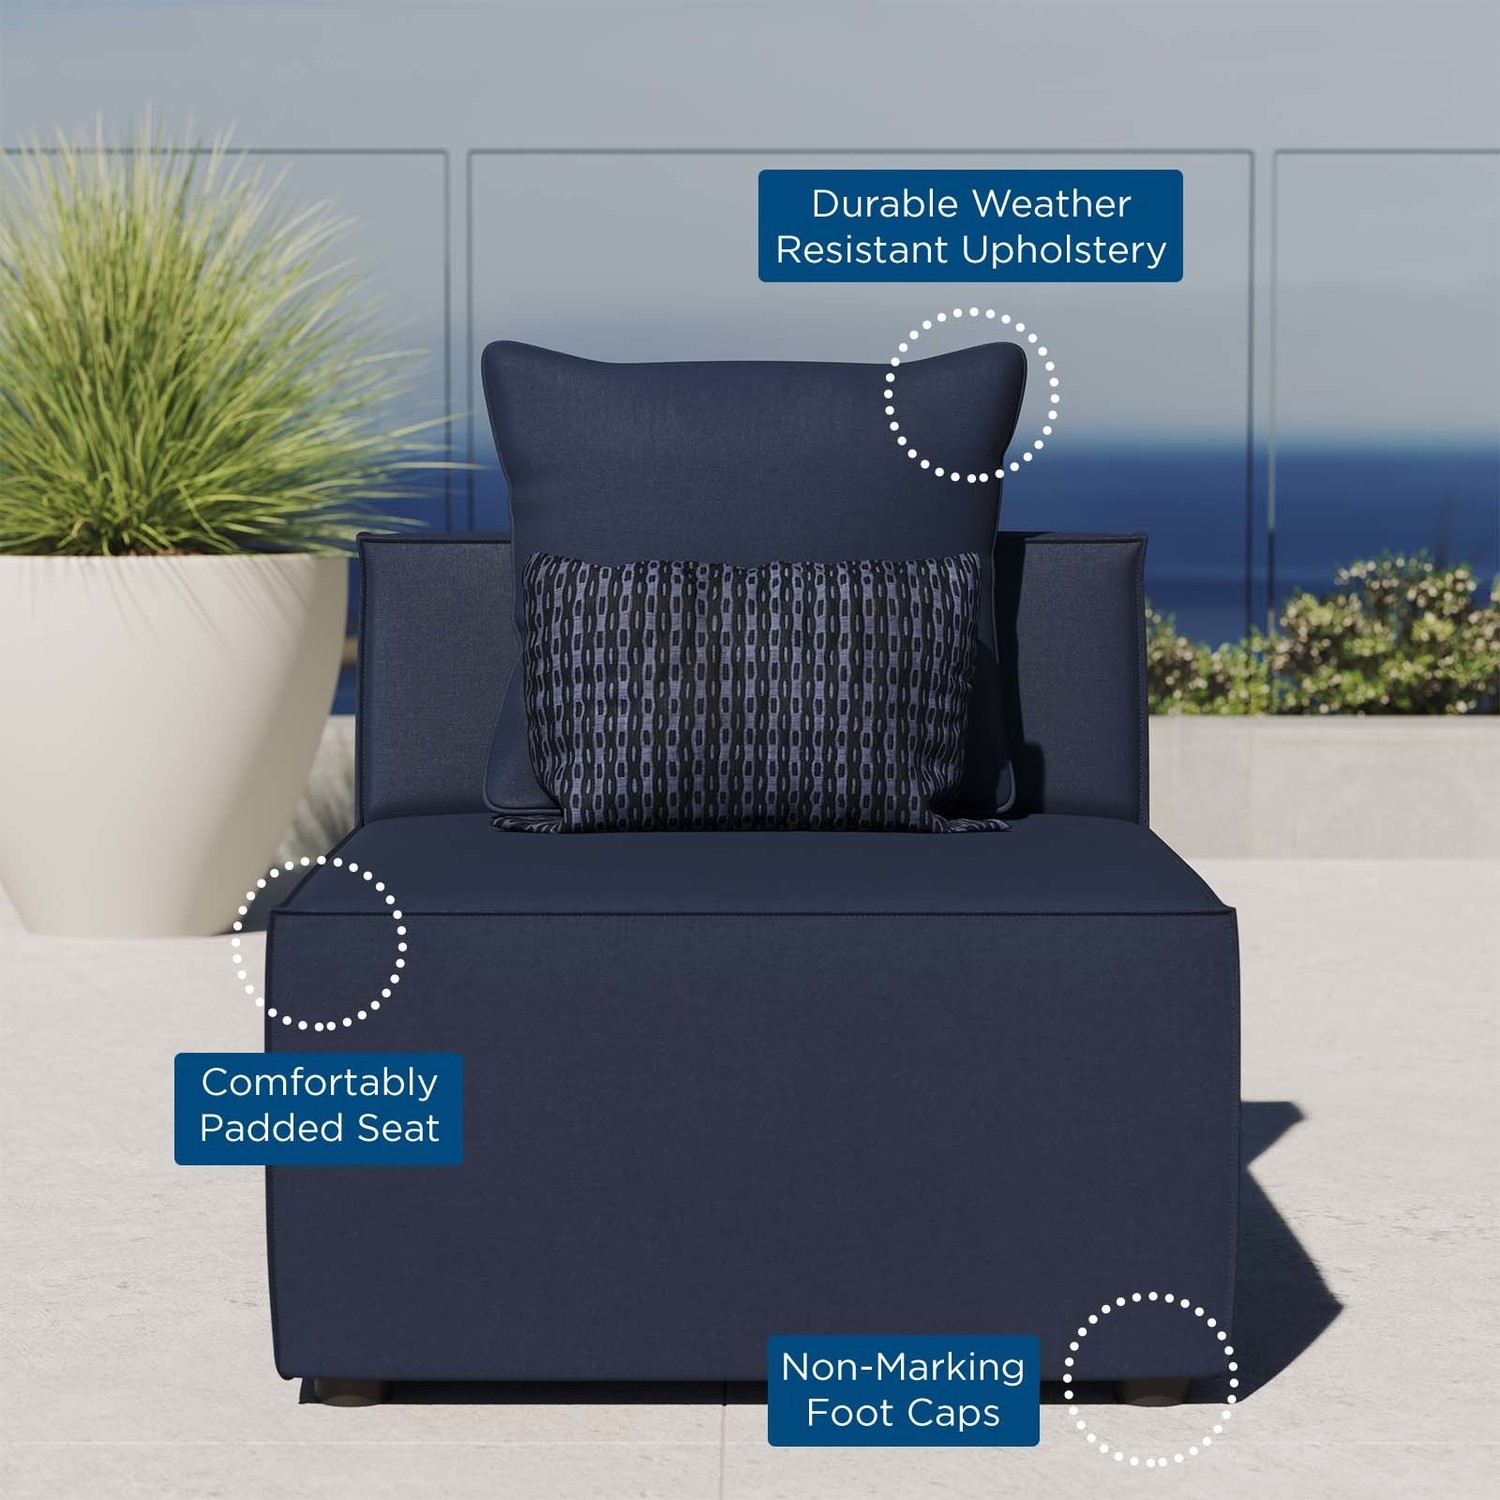 sofa design sofa design Modway Furniture Sofa Sectionals Navy Blue